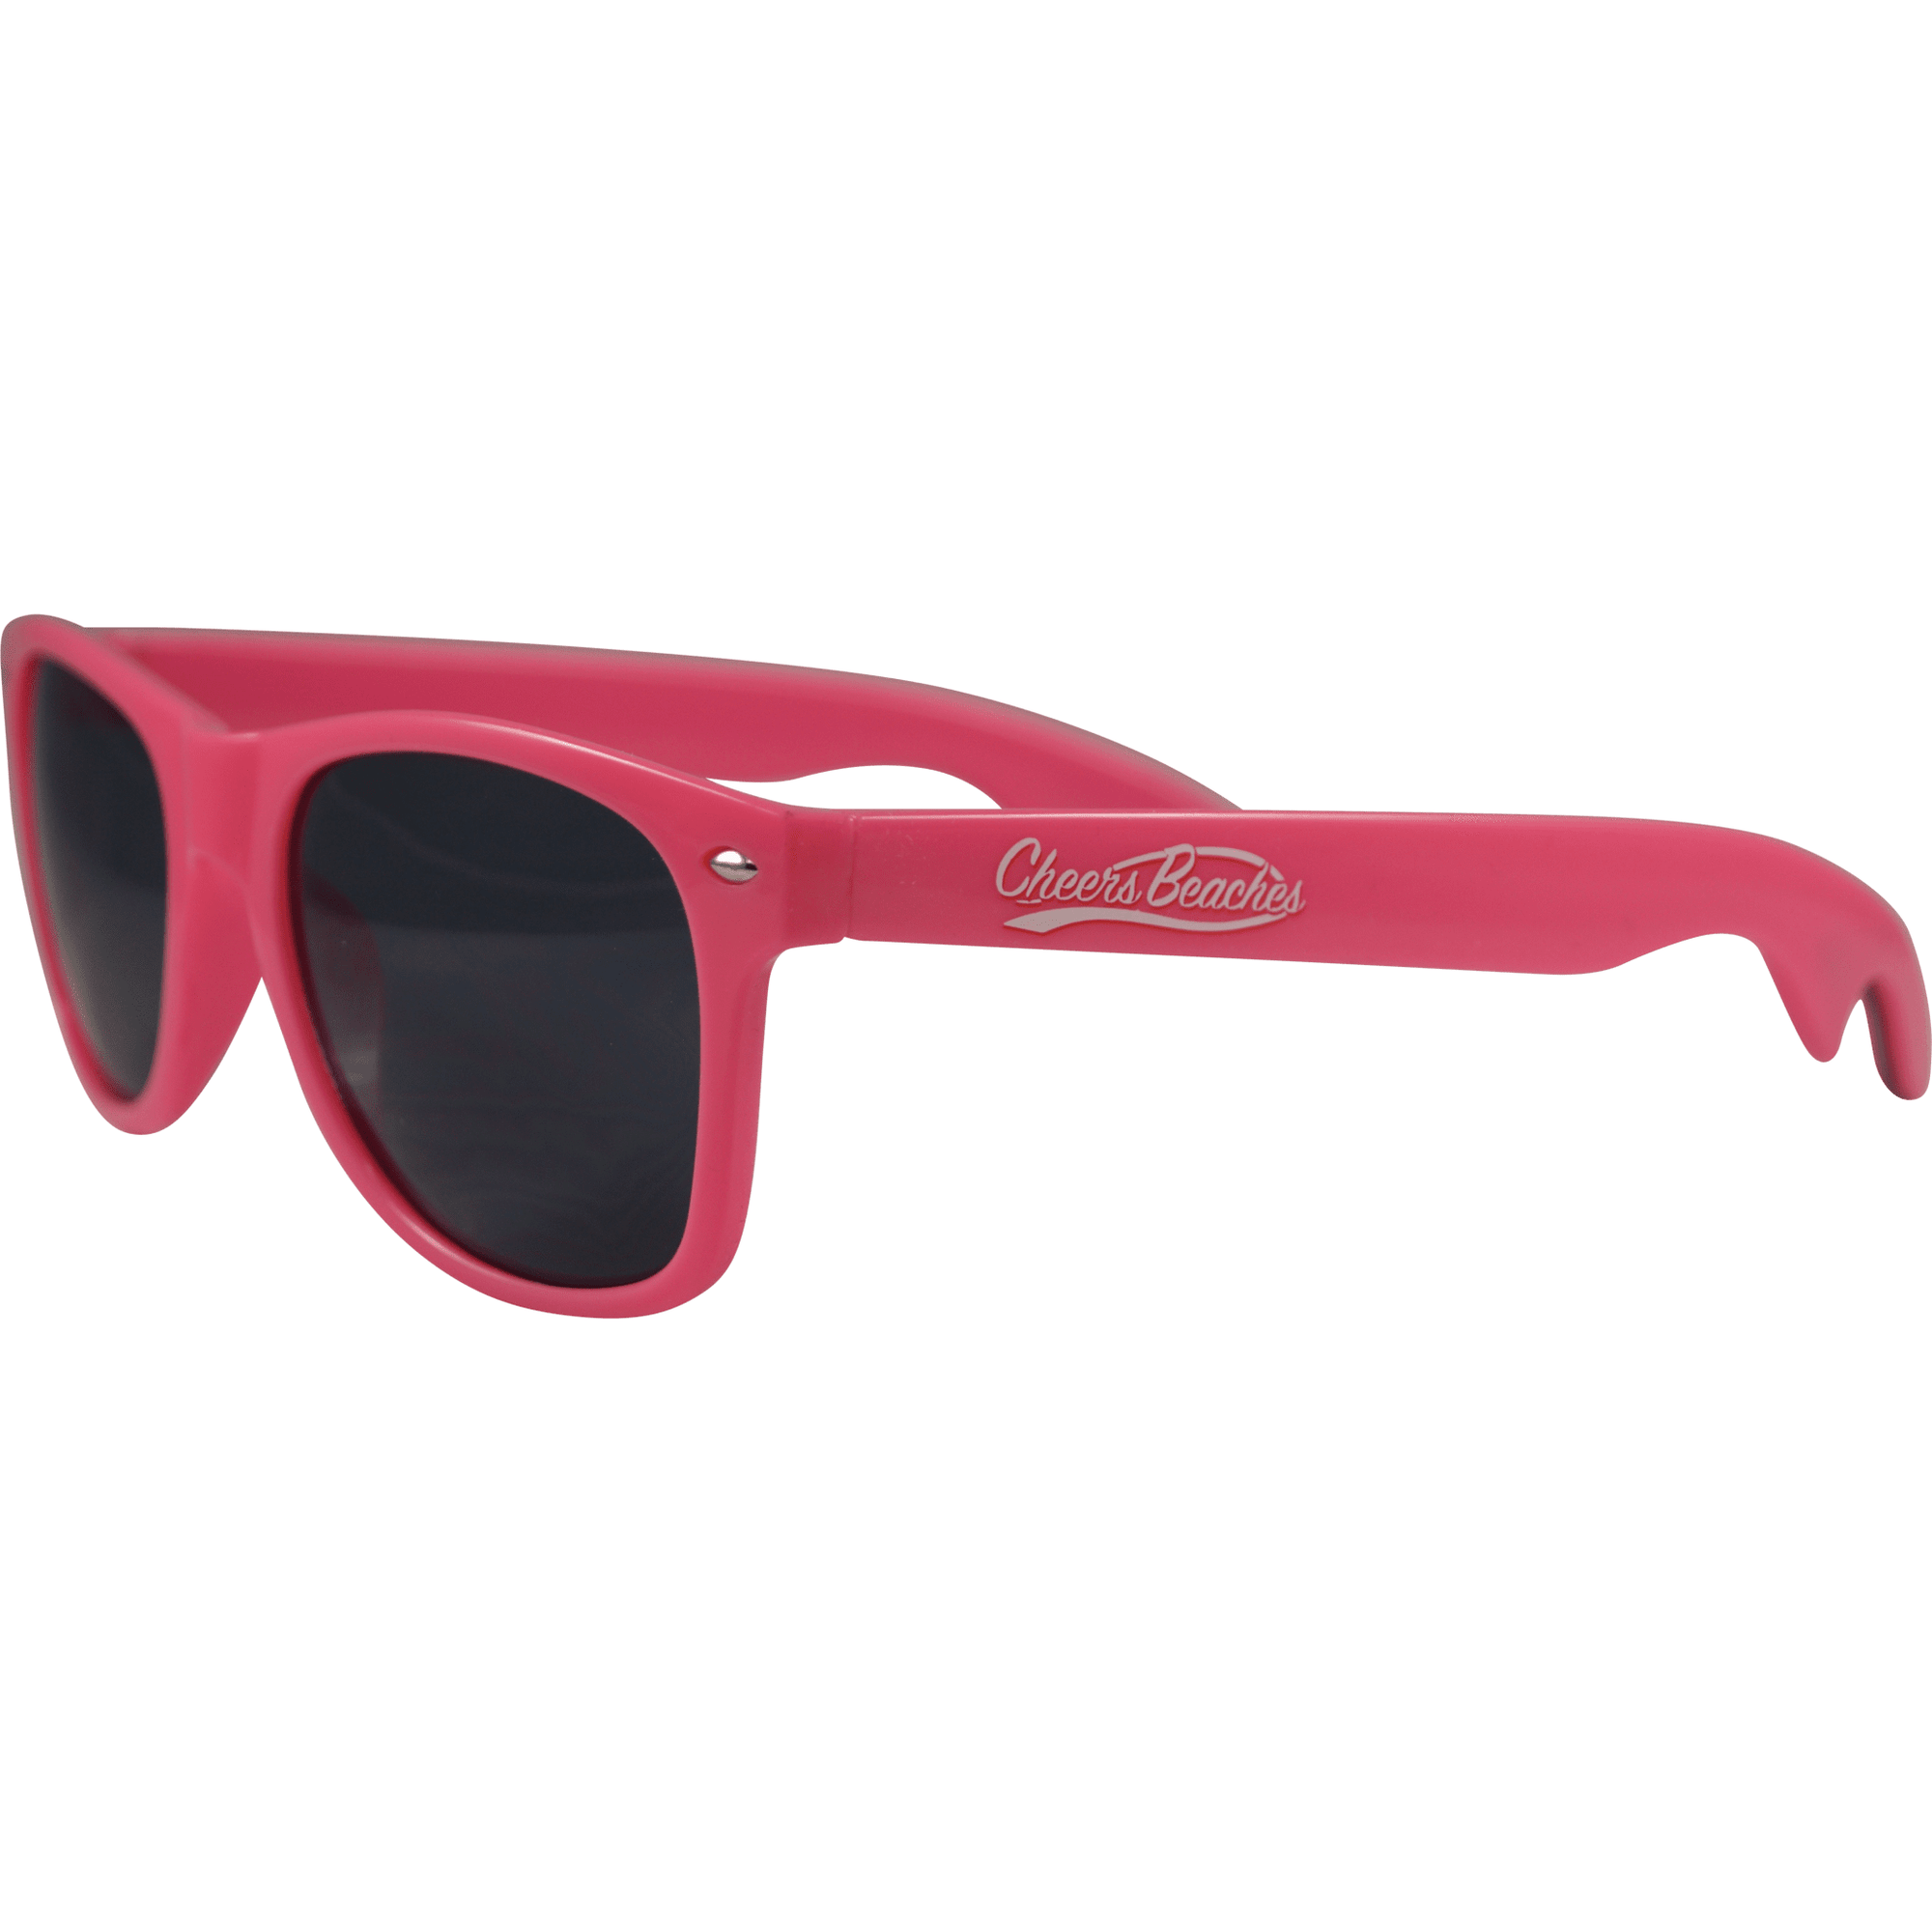 Cheers Beaches Accessories Cheers Beaches Bottle Opener Sunglasses: Pink